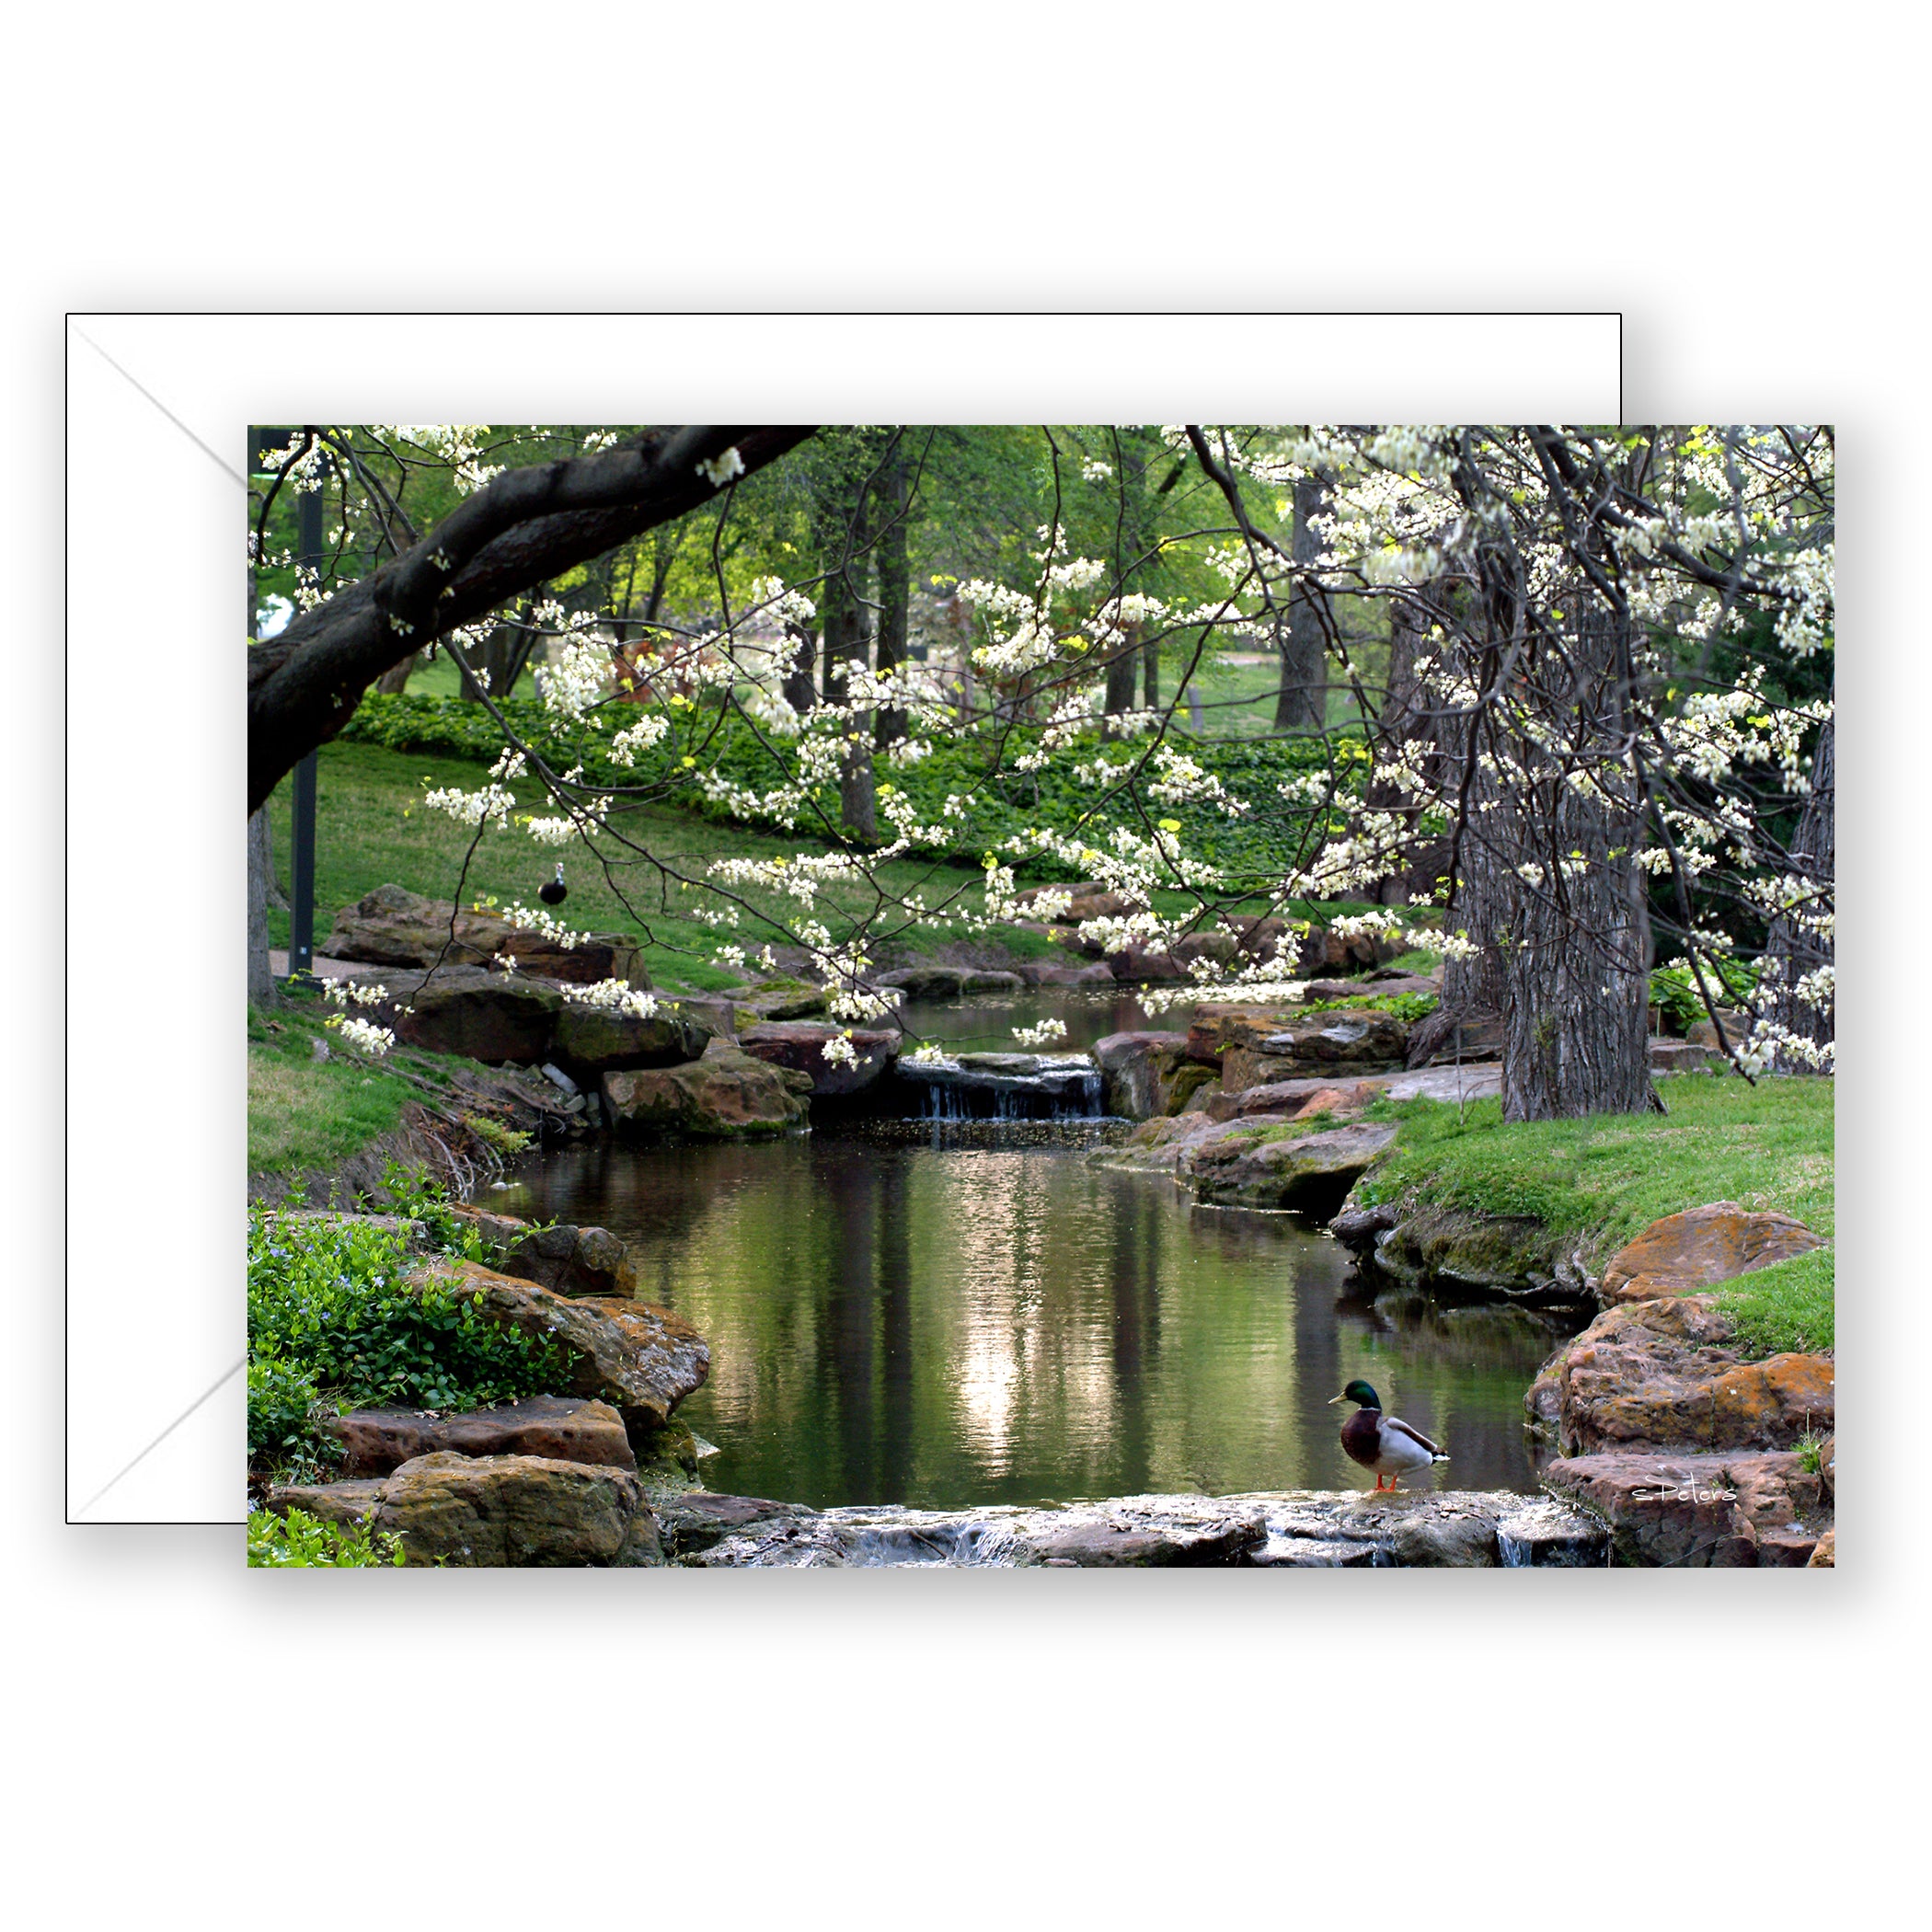 Peaceful Pond (Psalm 23: 1-2) - Sympathy Card